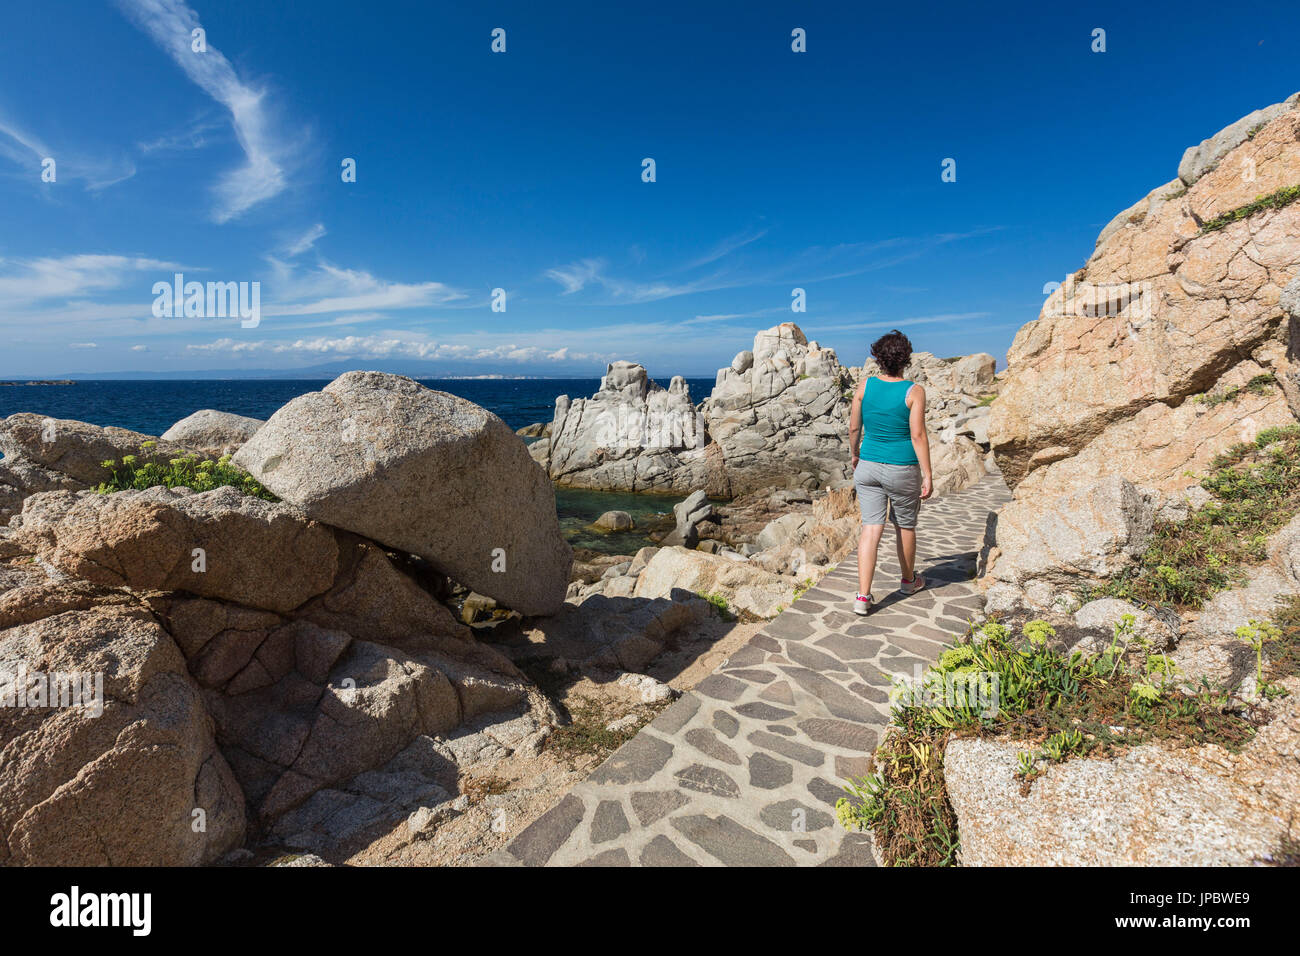 A walk on the rocky cliffs overlooking the turquoise sea Santa Teresa di Gallura Province of Sassari Sardinia Italy Europe Stock Photo